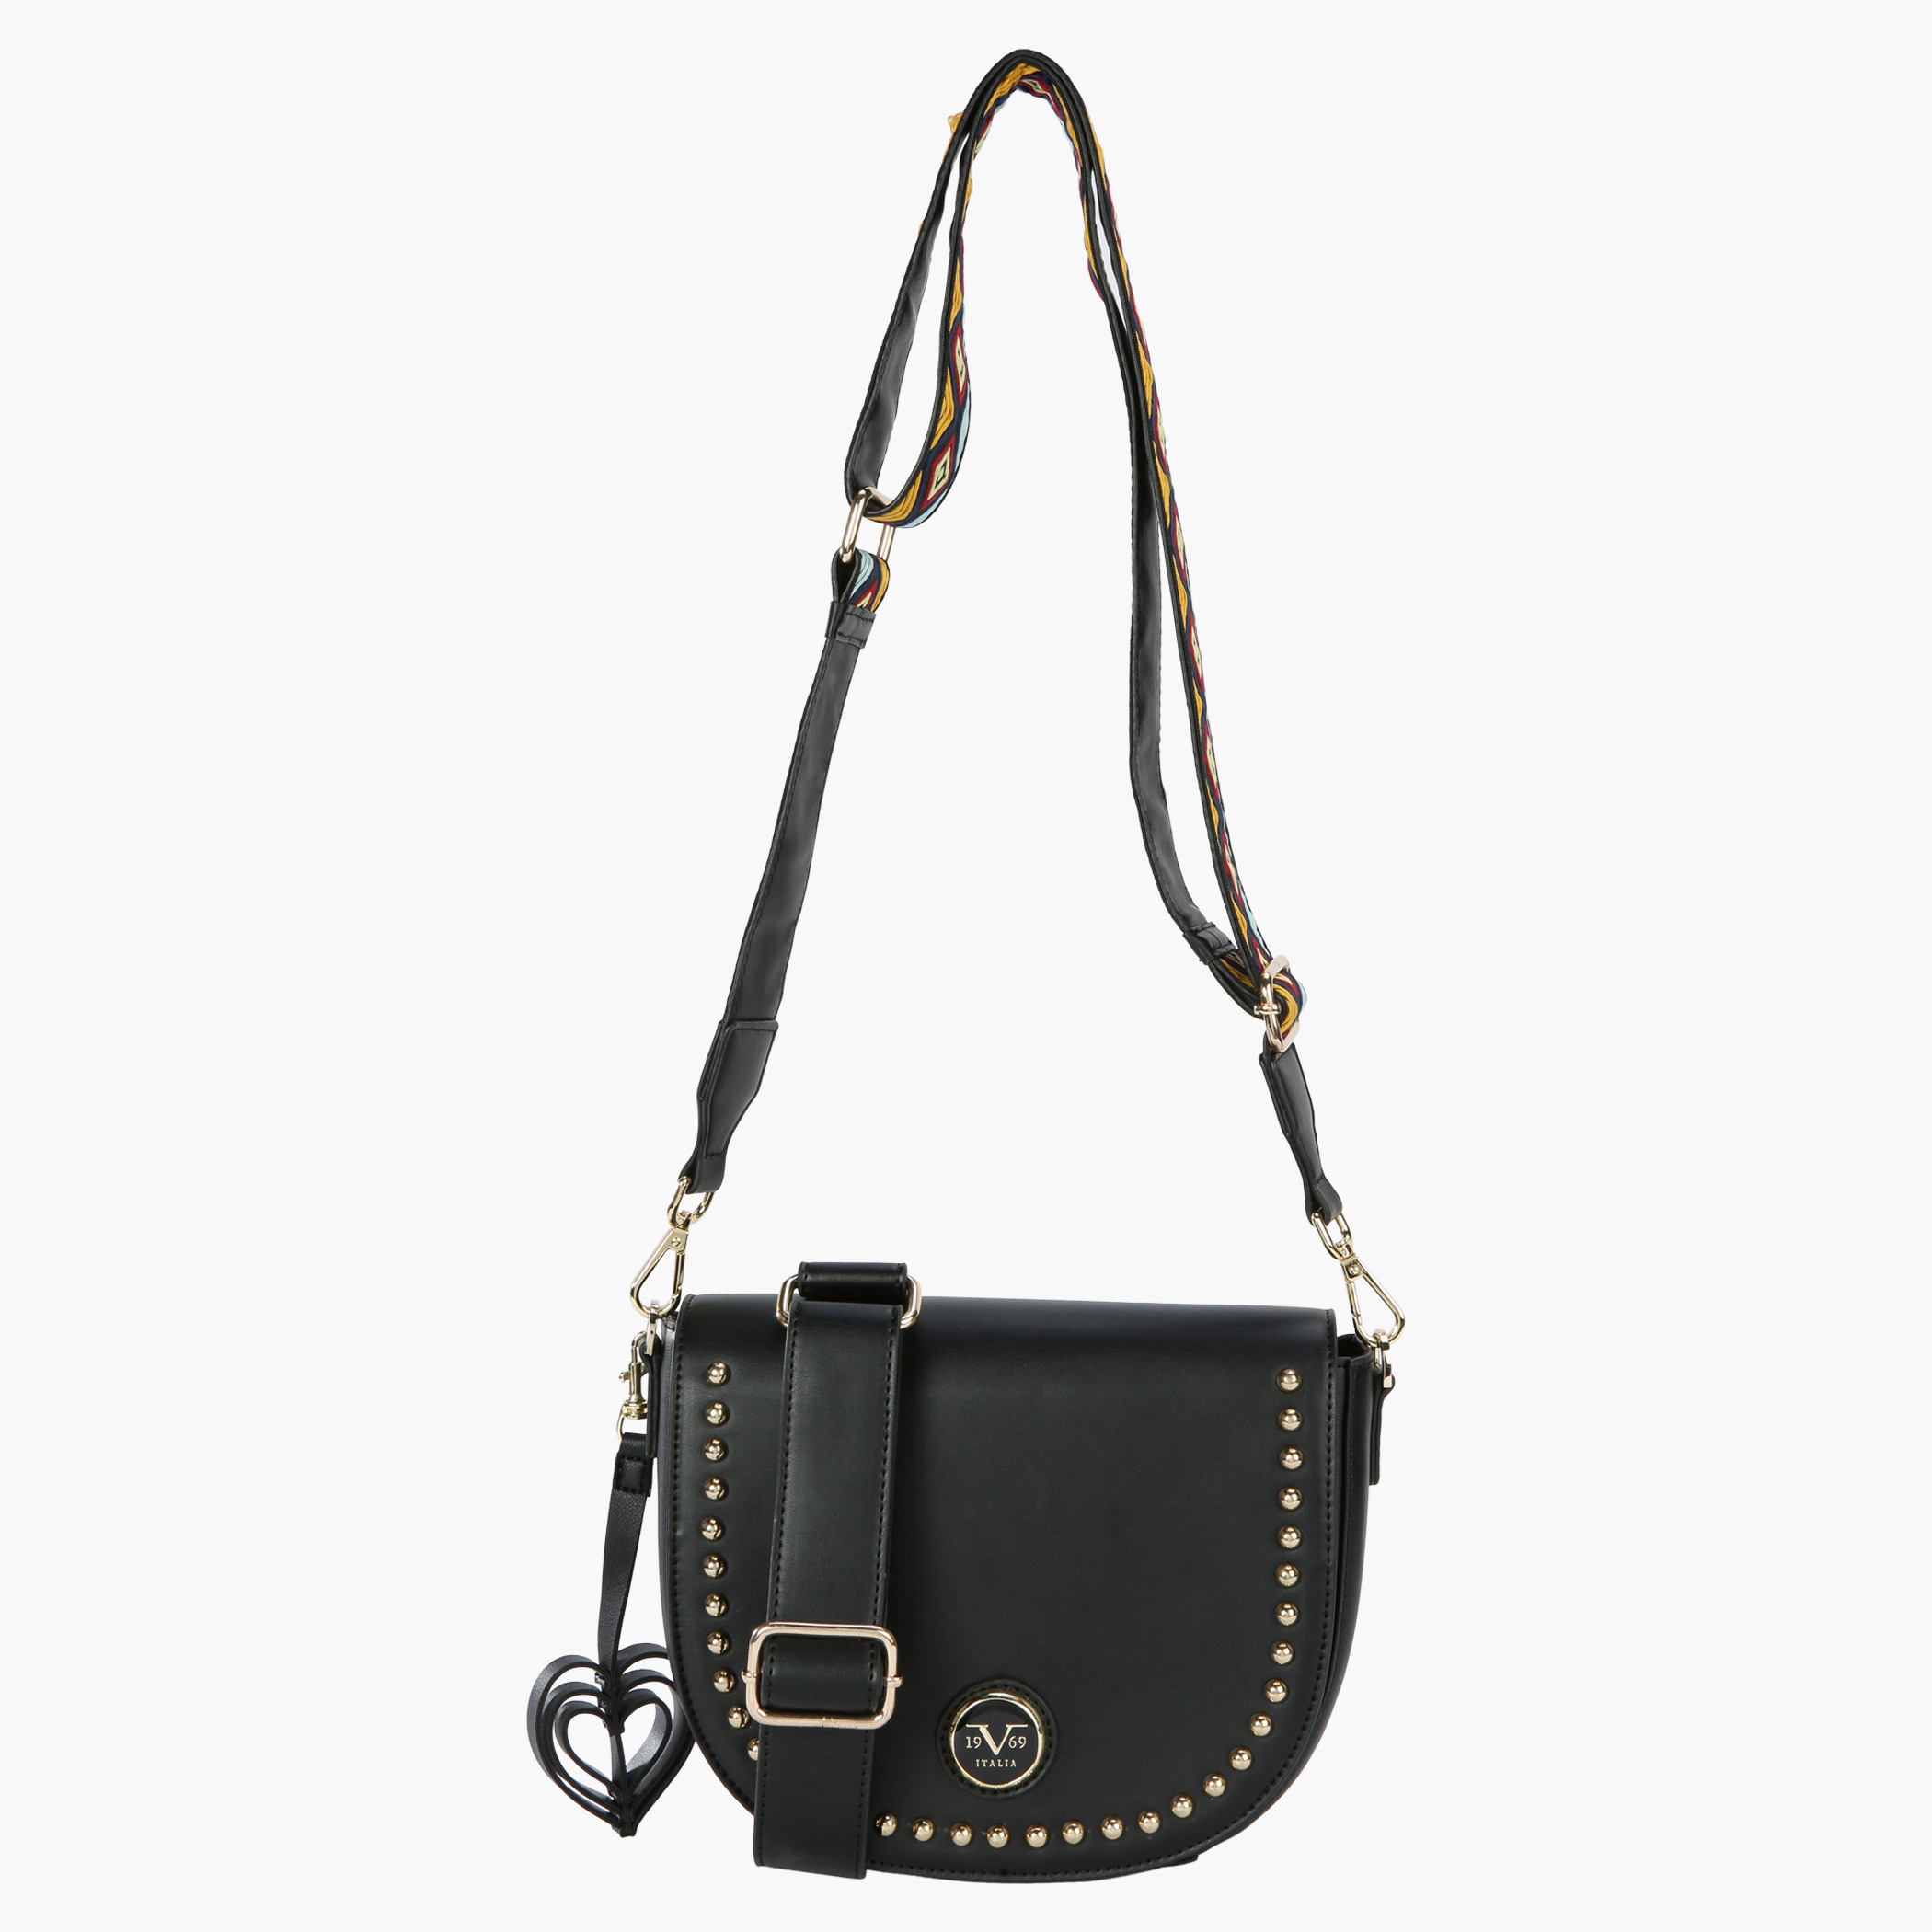 Versace 19v69 italia handbag - Germany, New - The wholesale platform |  Merkandi B2B